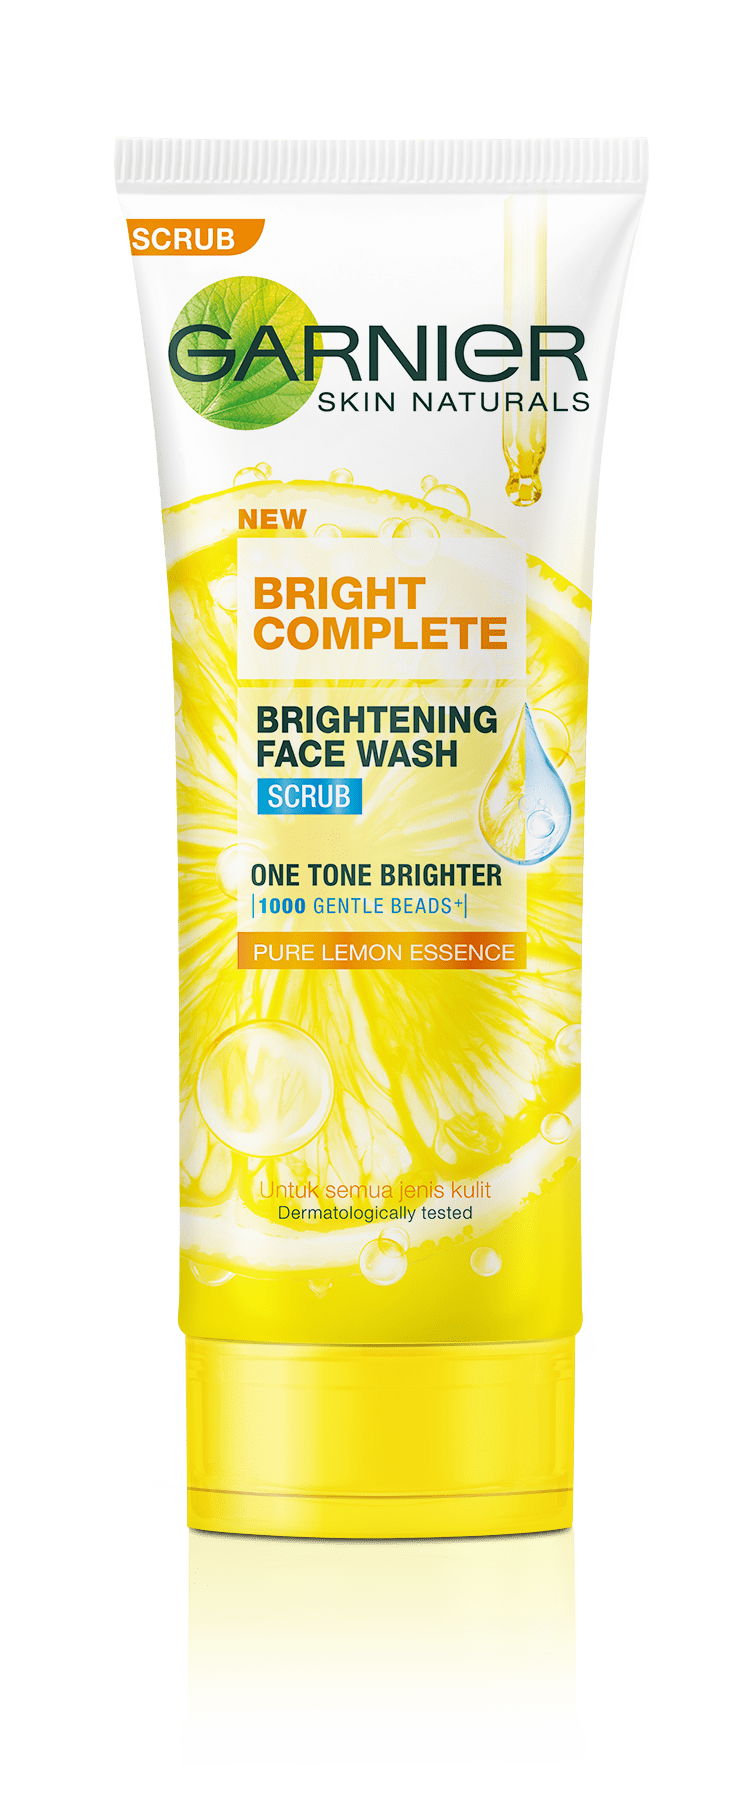 Complete Brightening Face Scrub 8991380700593_T3